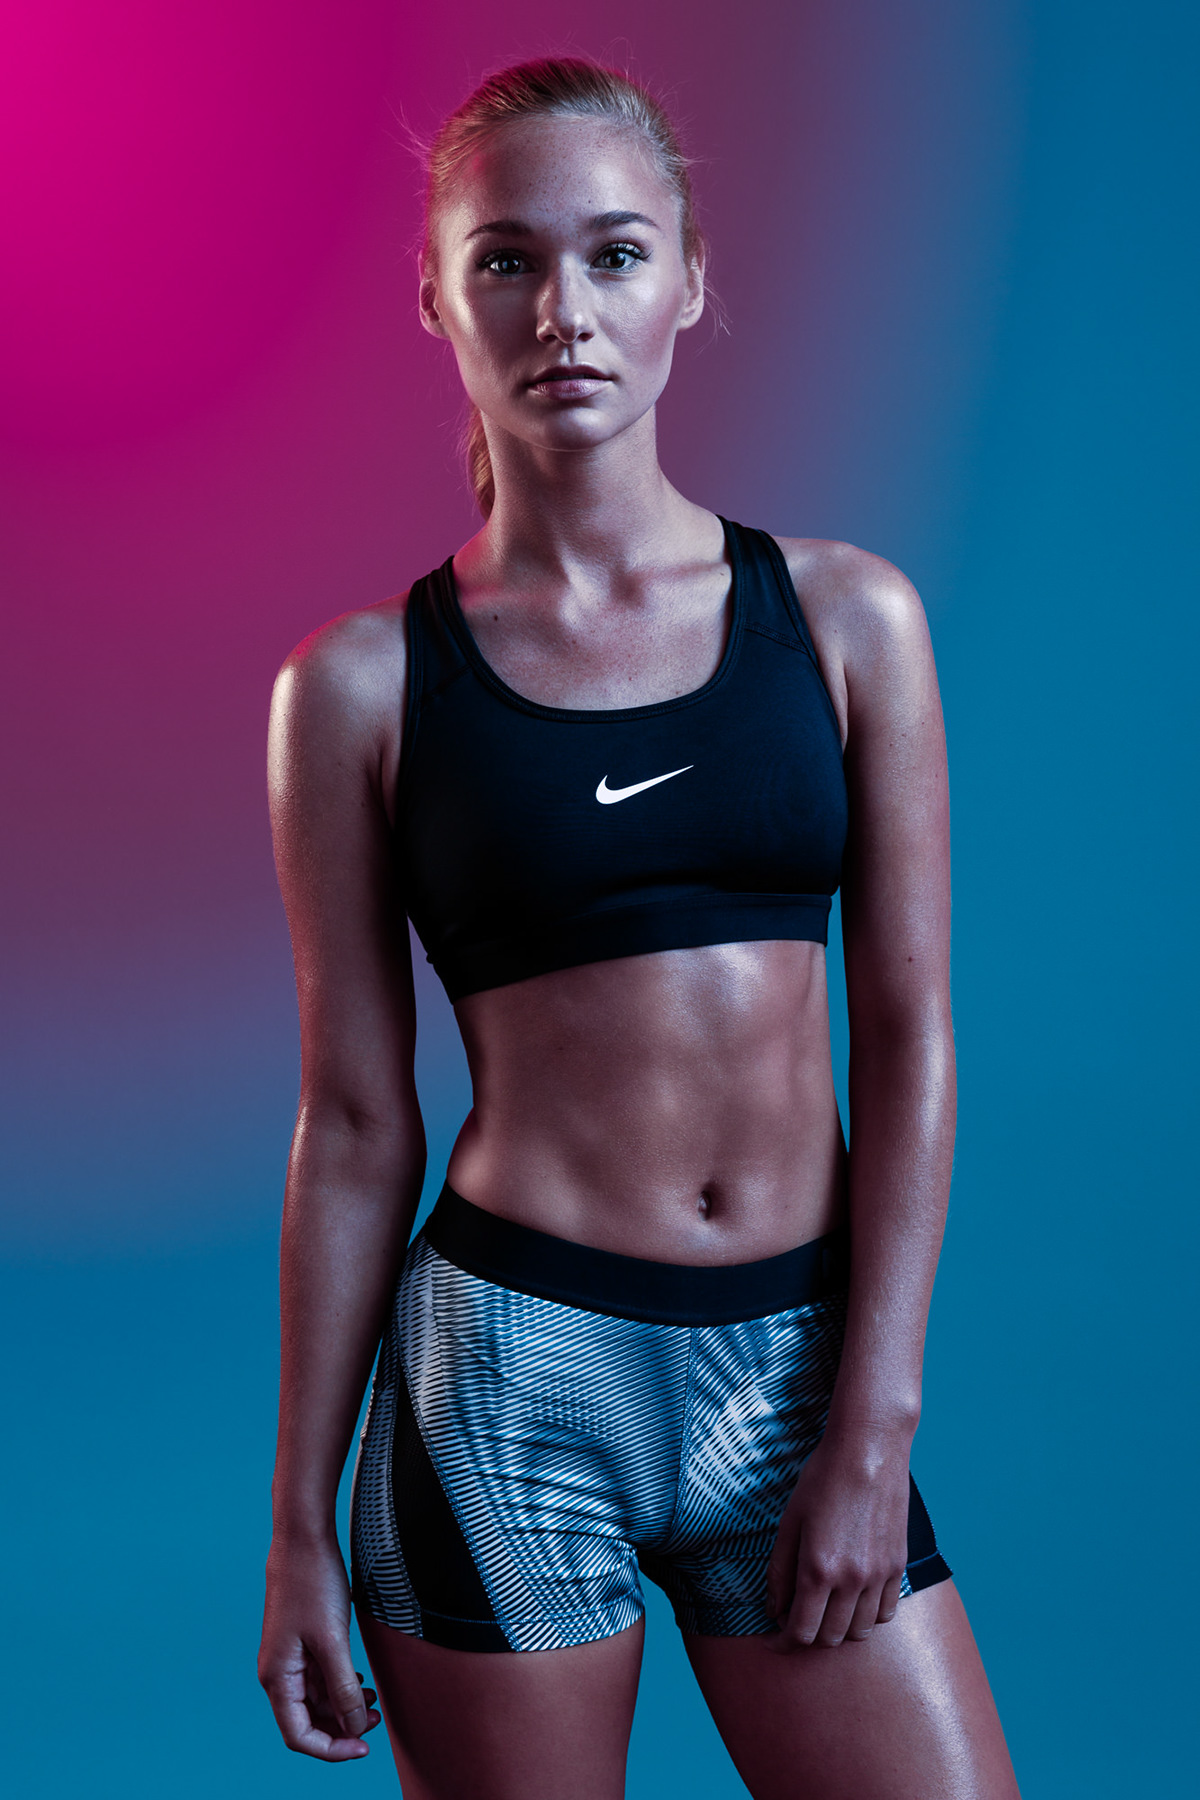 nike photoshoot - Google Search  Fitness models, Nike pro bra, Nike  photoshoot